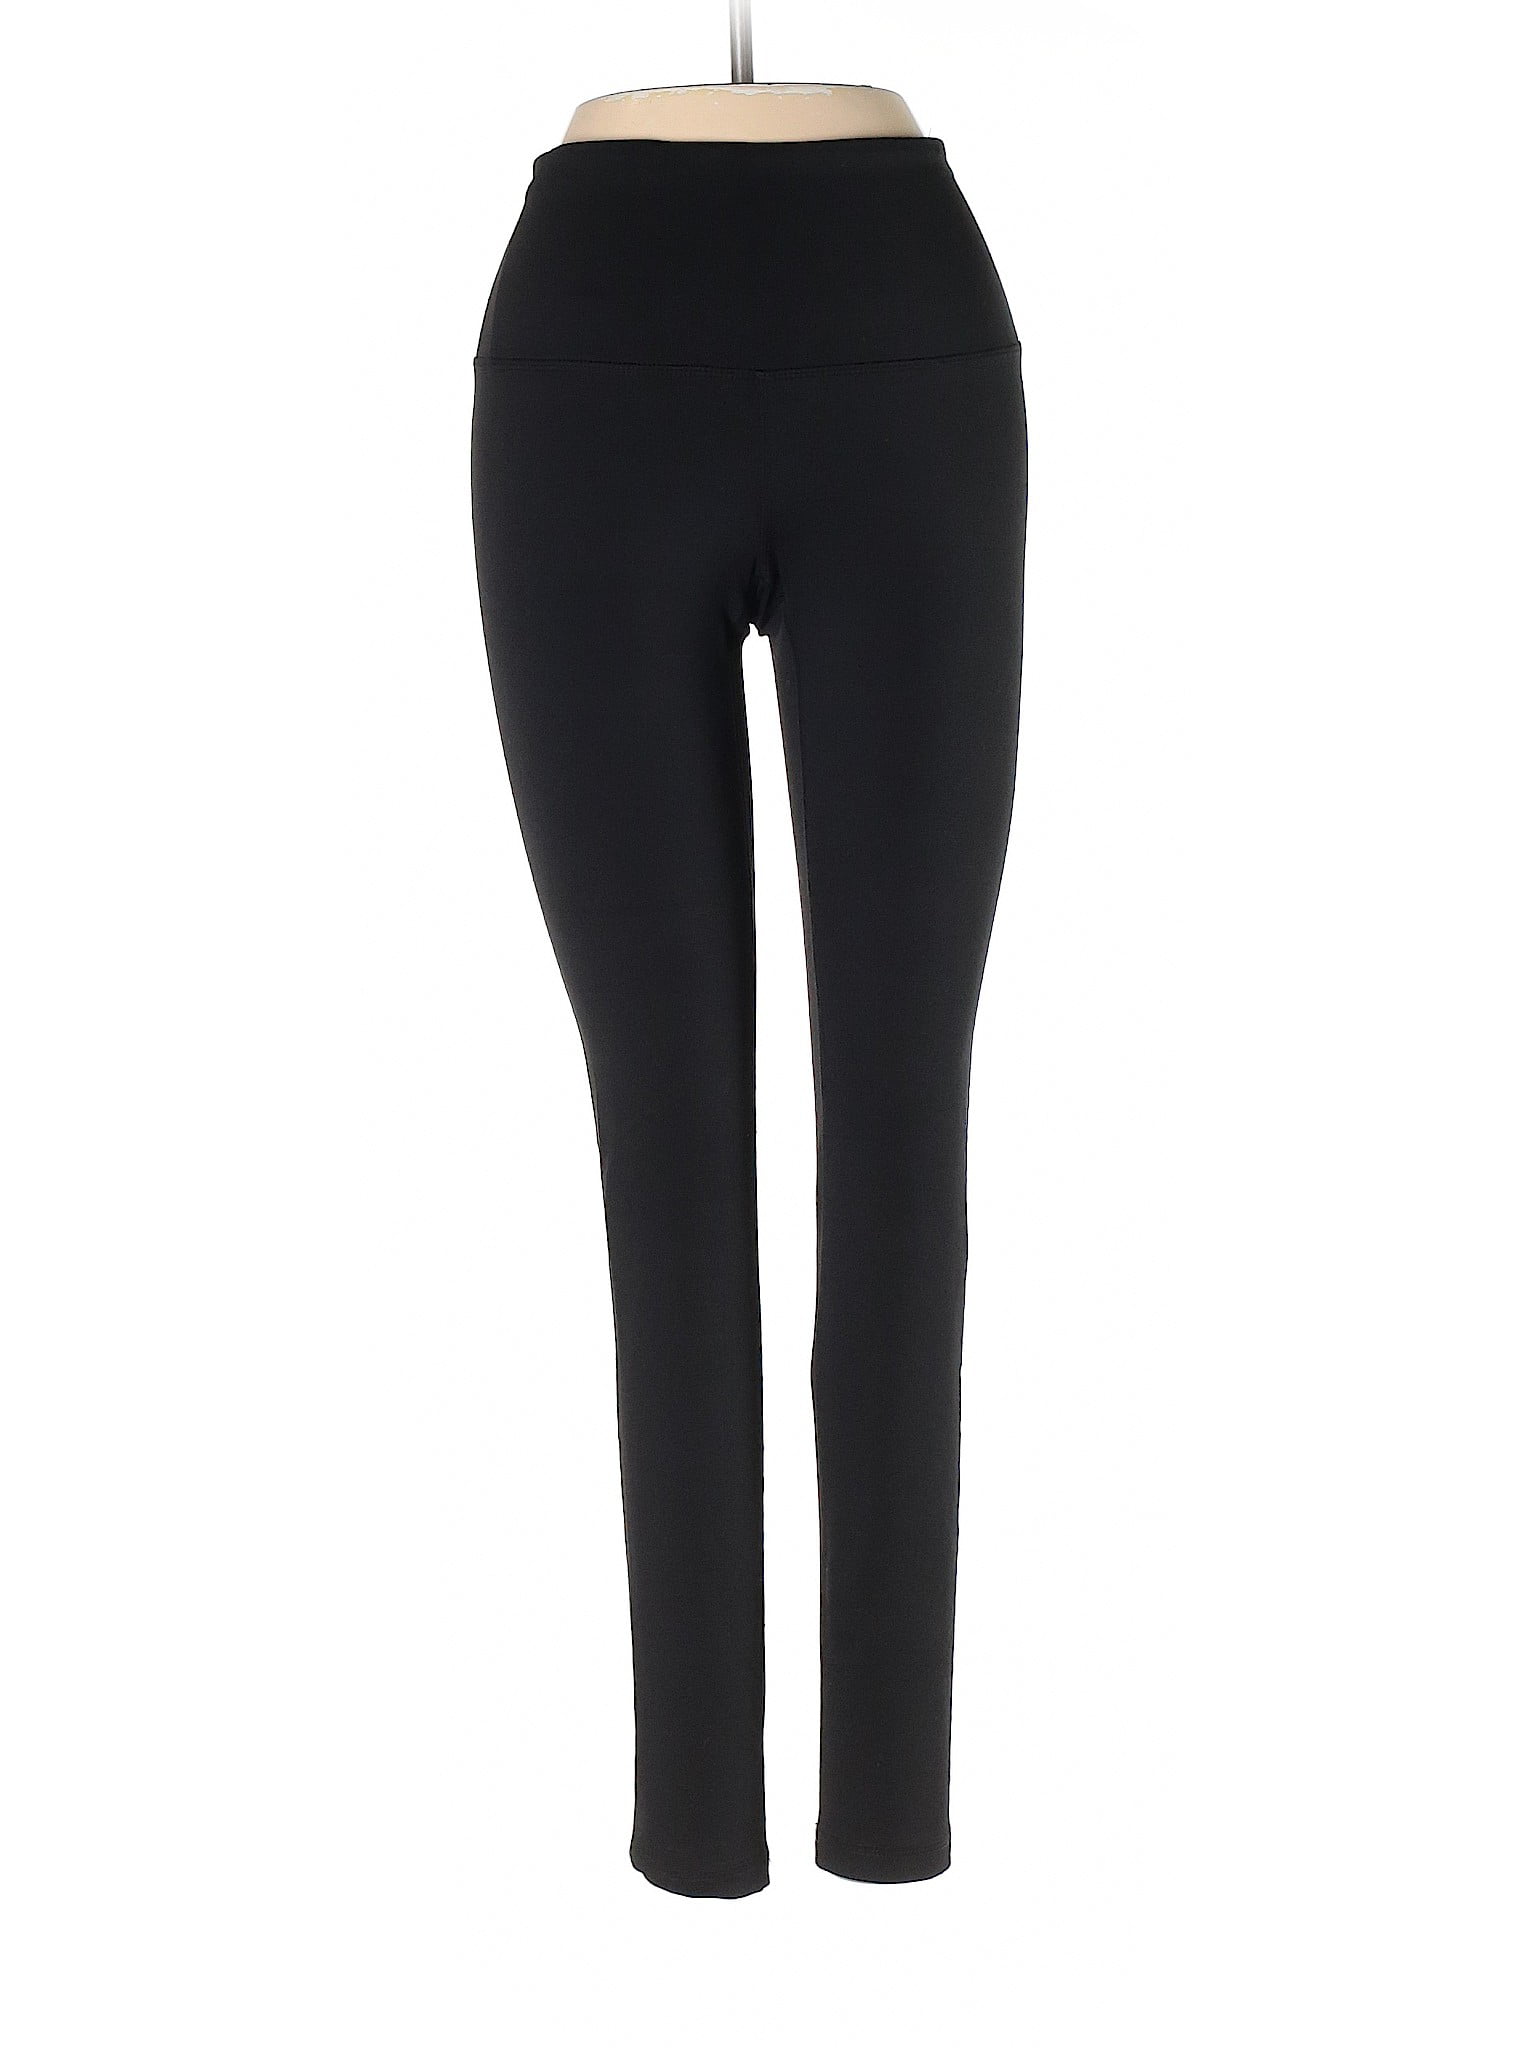 Zella - Pre-Owned Zella Women's Size XS Active Pants - Walmart.com ...